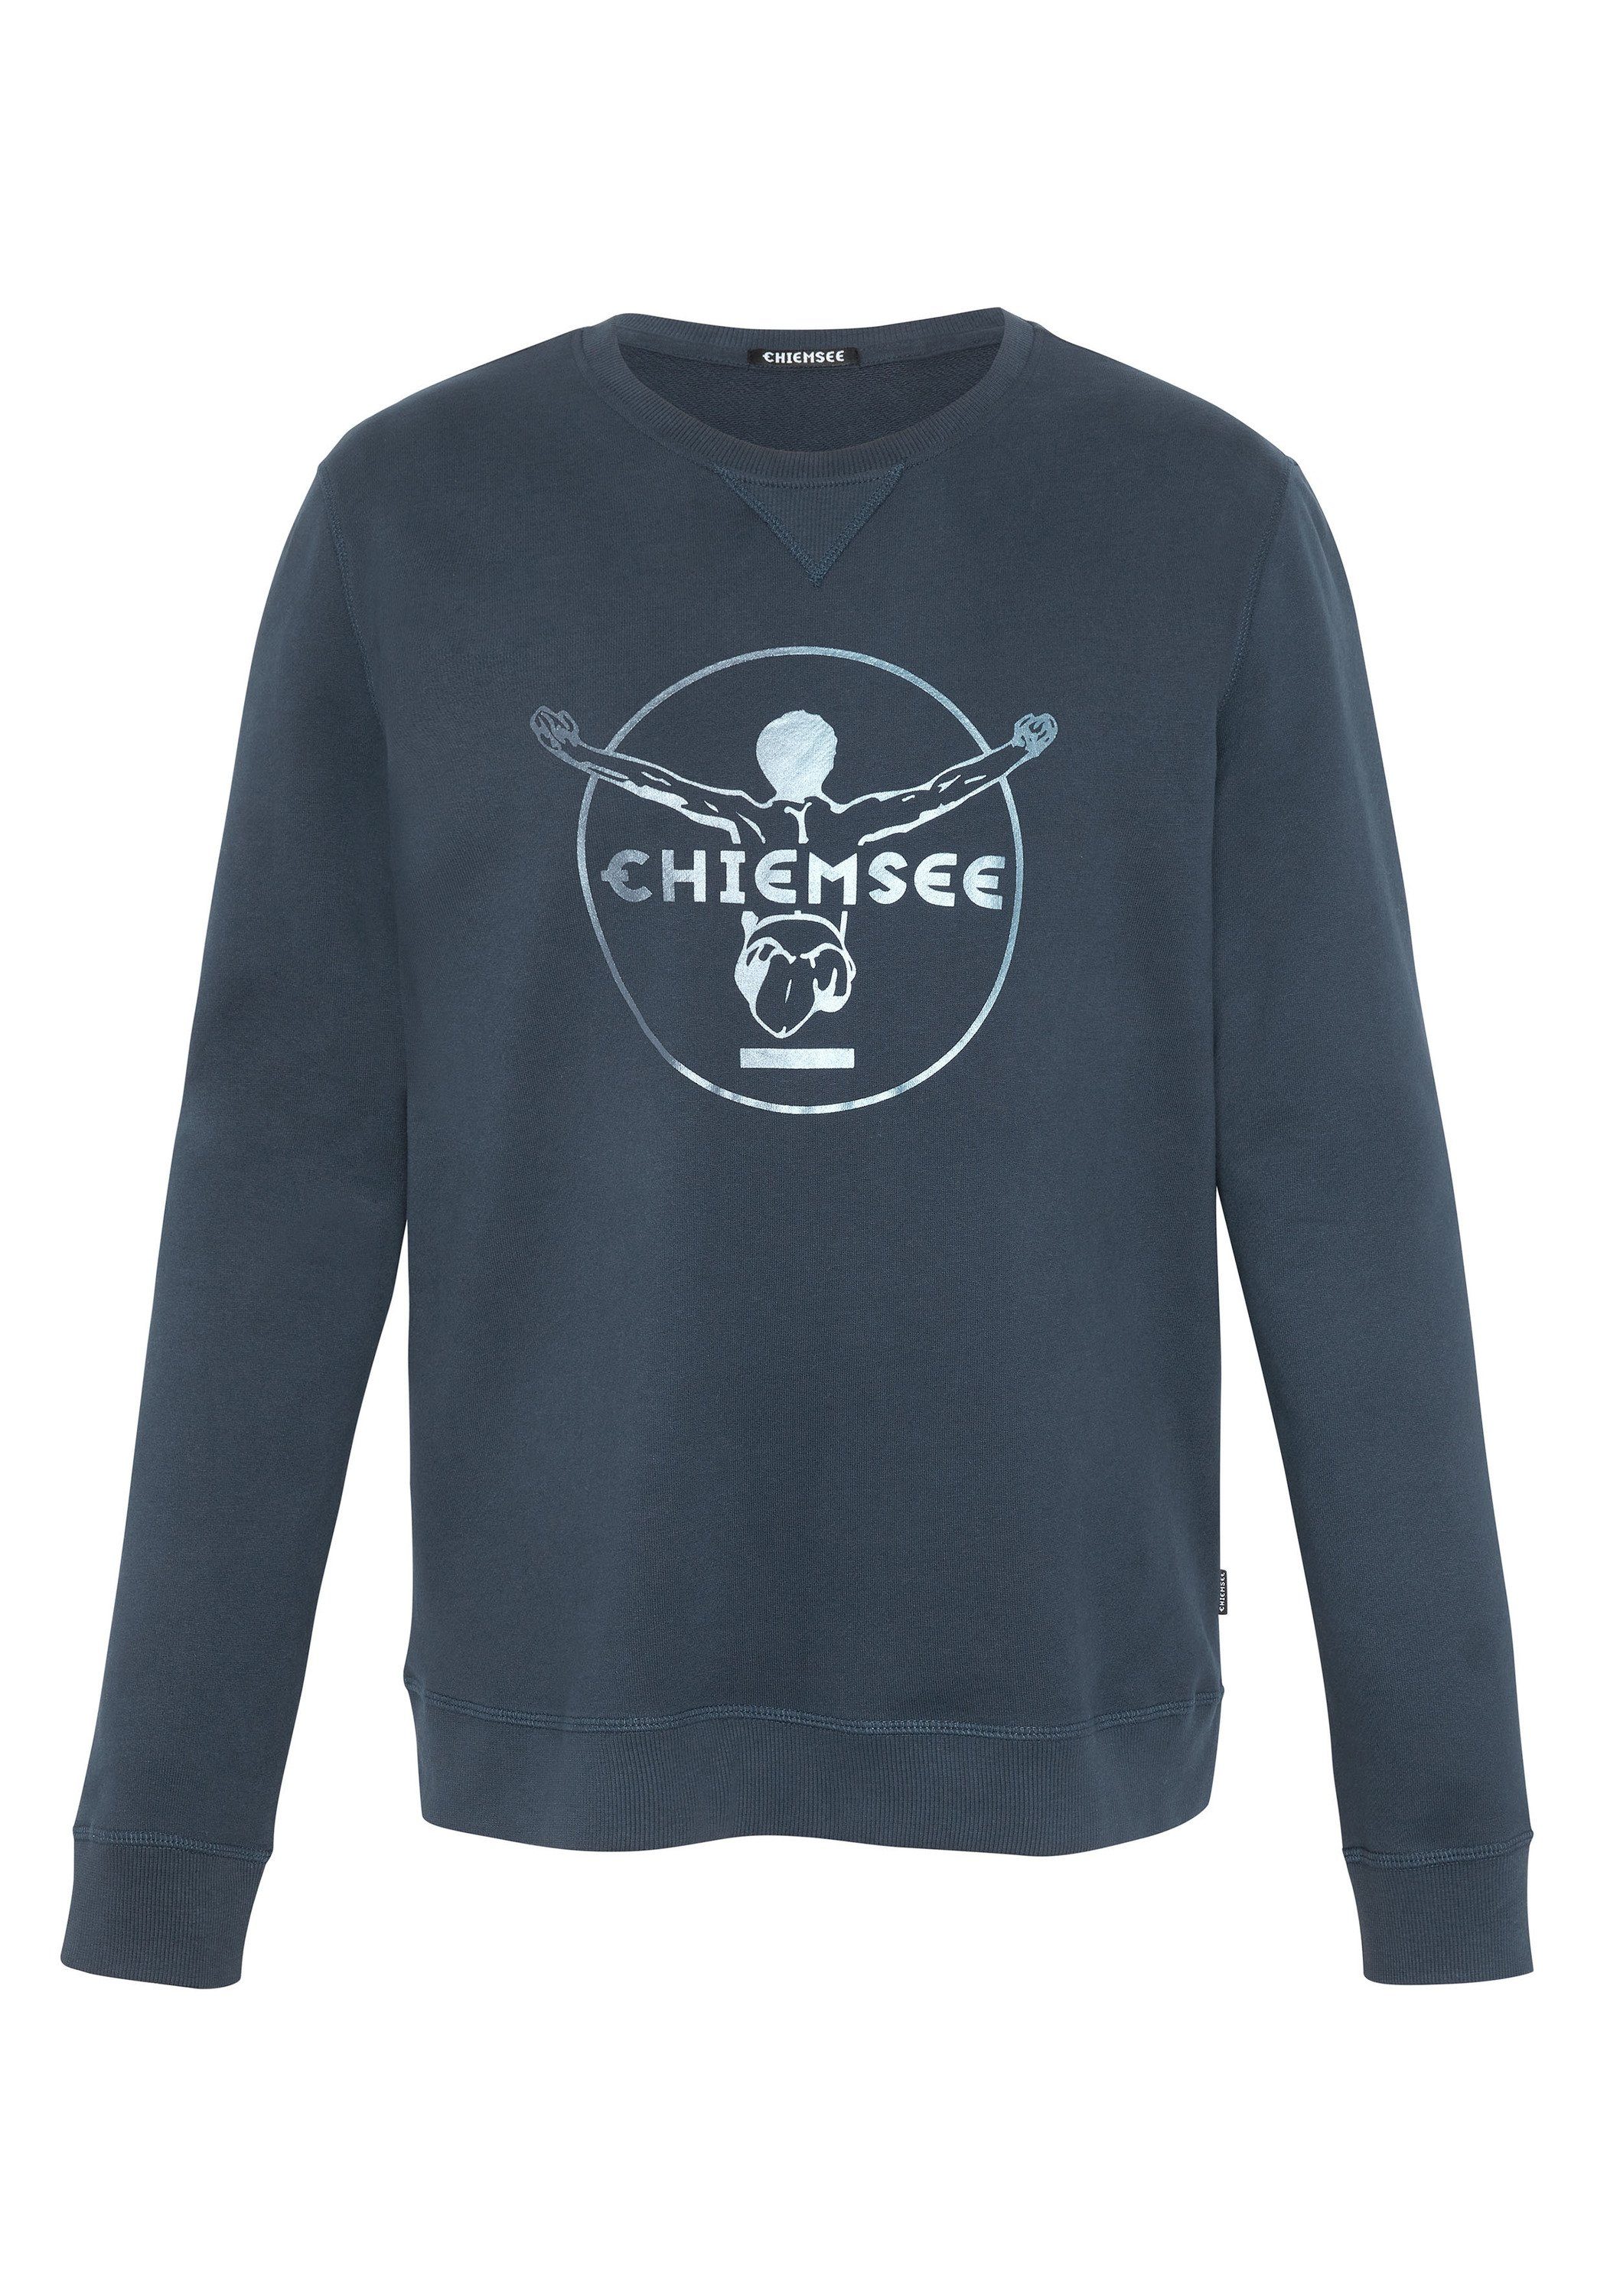 Chiemsee Sweatshirt Sweater im Label-Look 1 19-4010 Total Eclipse